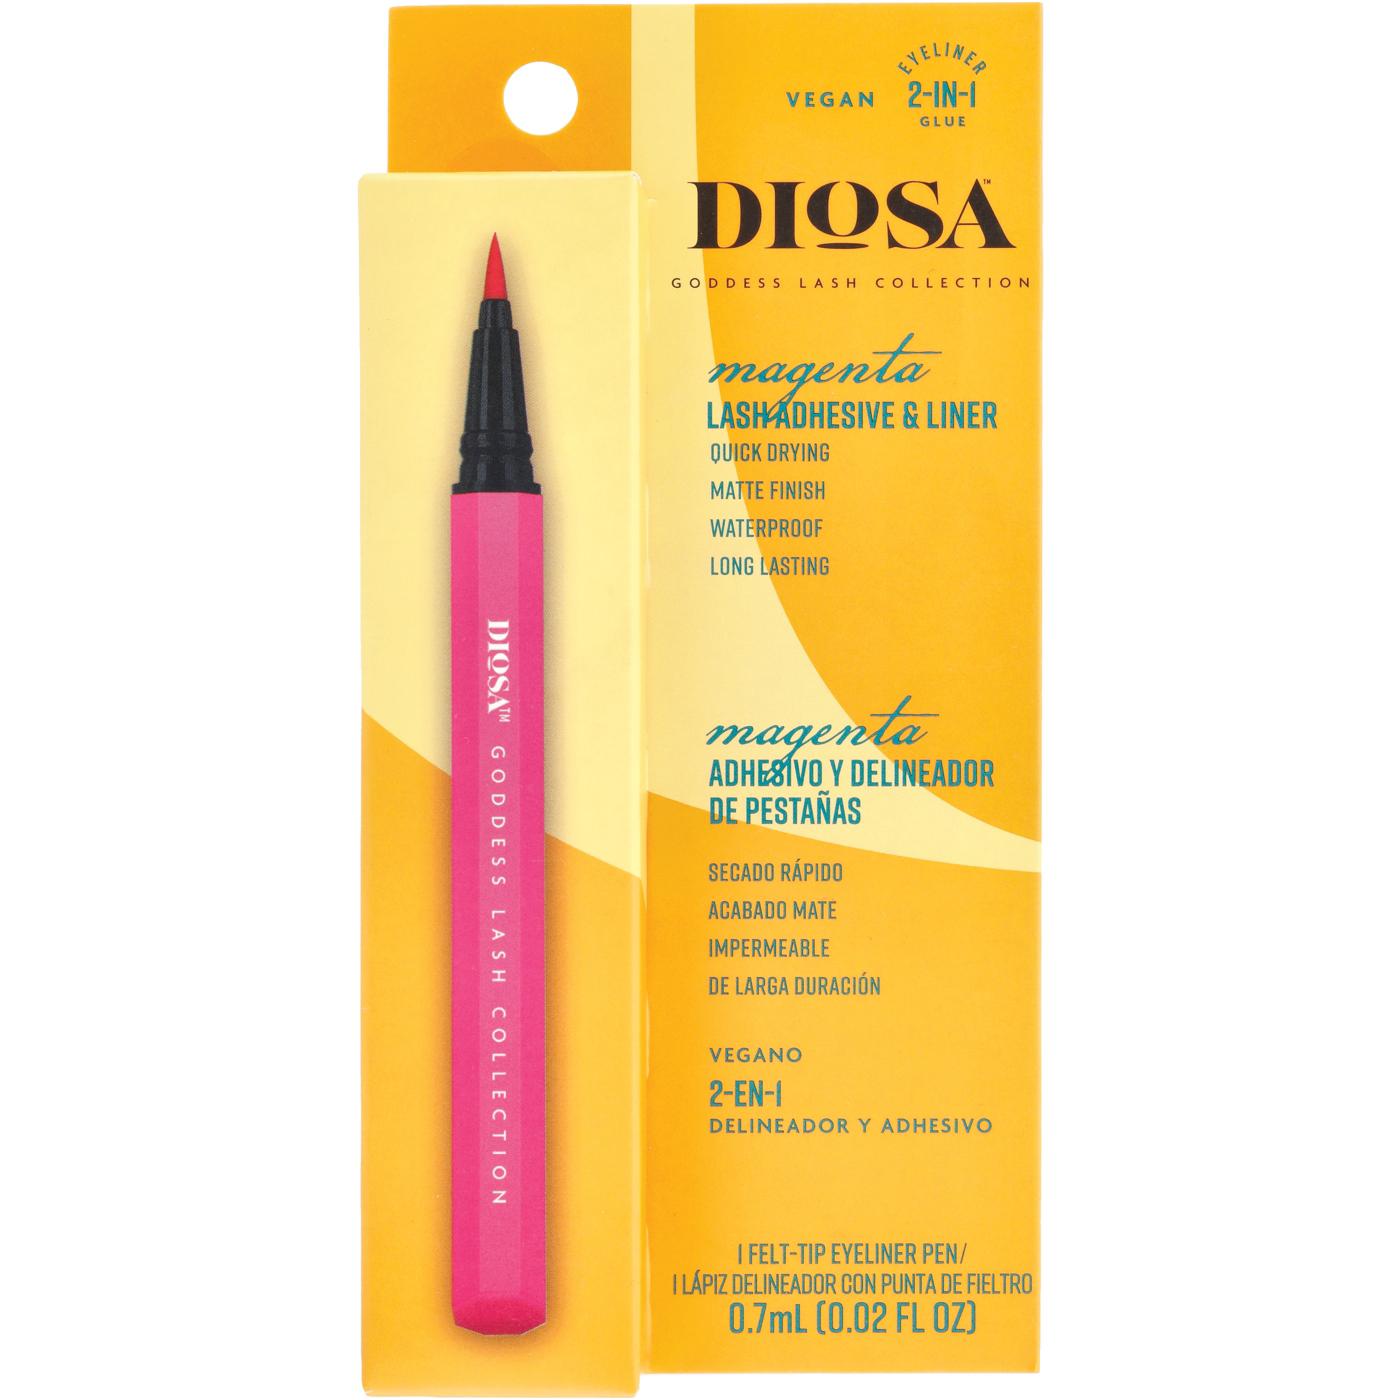 Diosa Lash Adhesive & Liner – Magenta; image 1 of 5